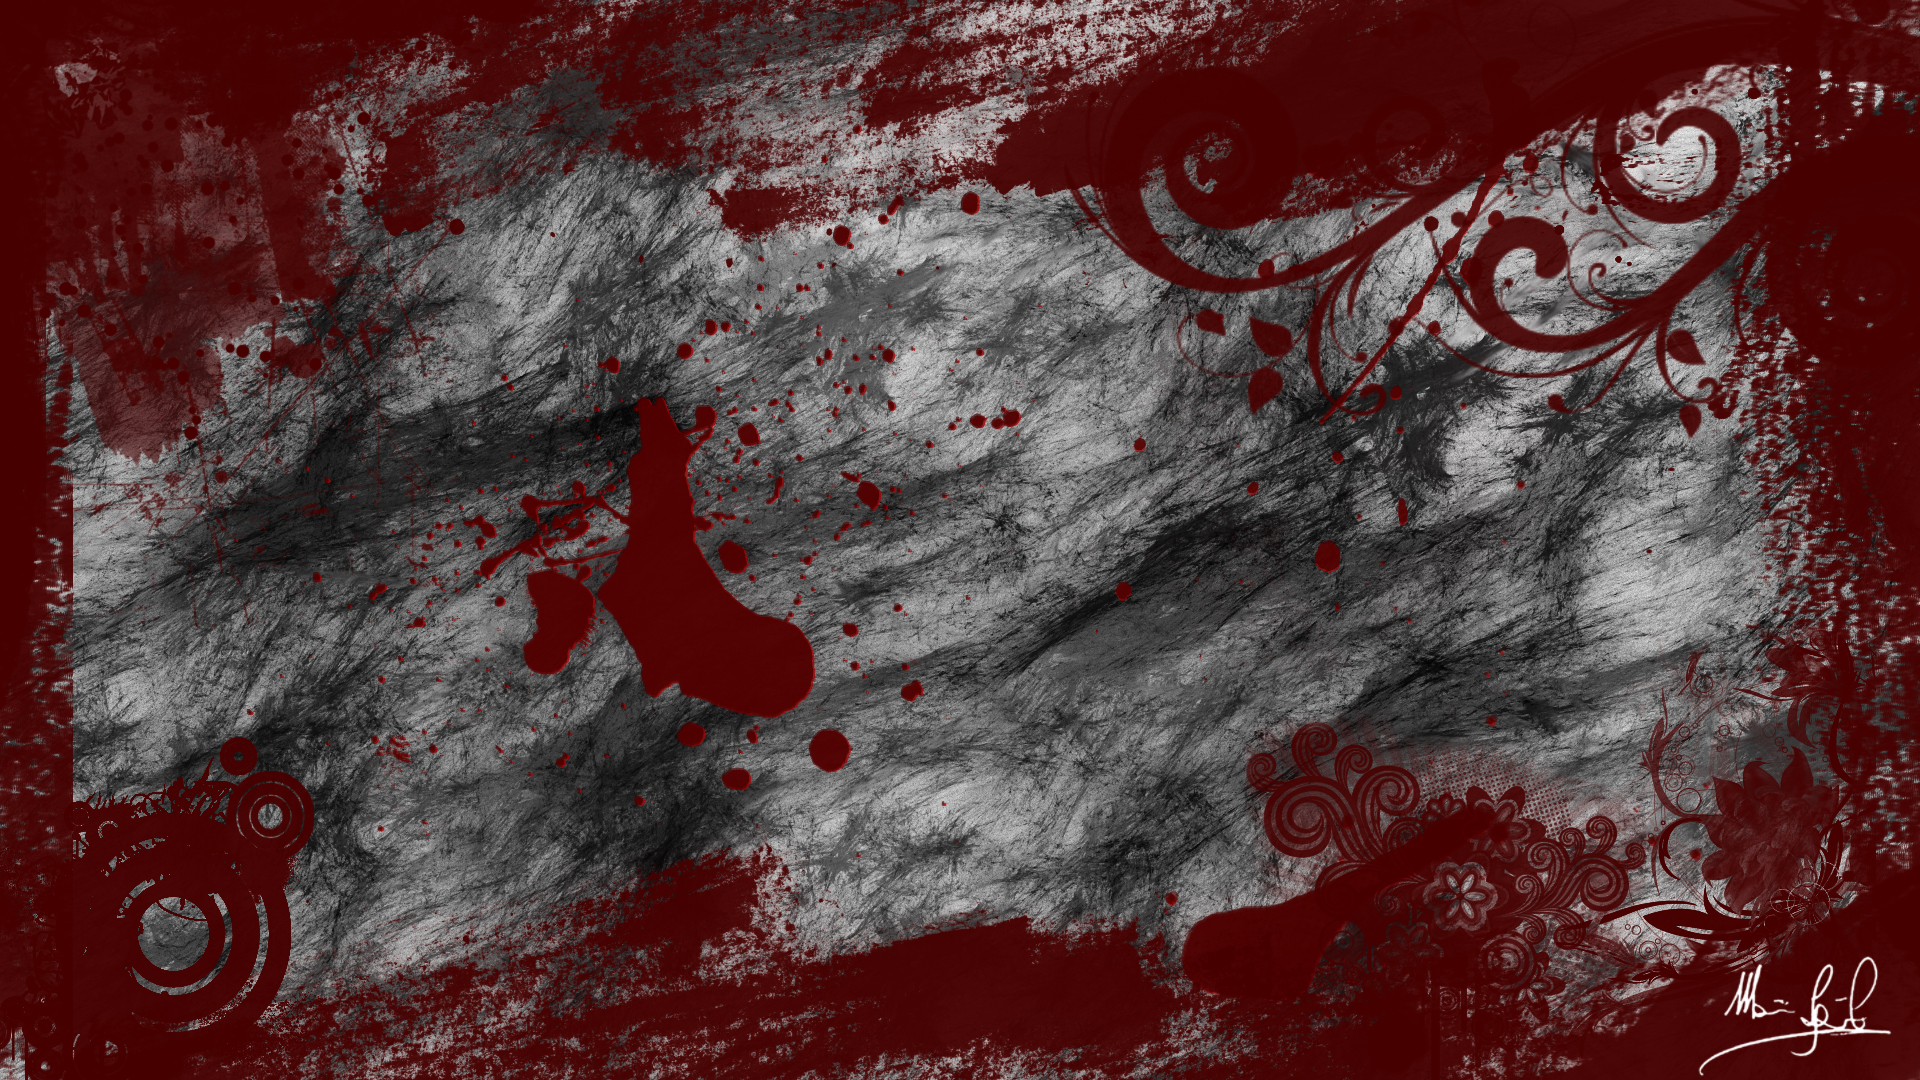 Blood Wallpaper By Theartofdarkness On Deviantart HD Wallpapers Download Free Images Wallpaper [wallpaper981.blogspot.com]